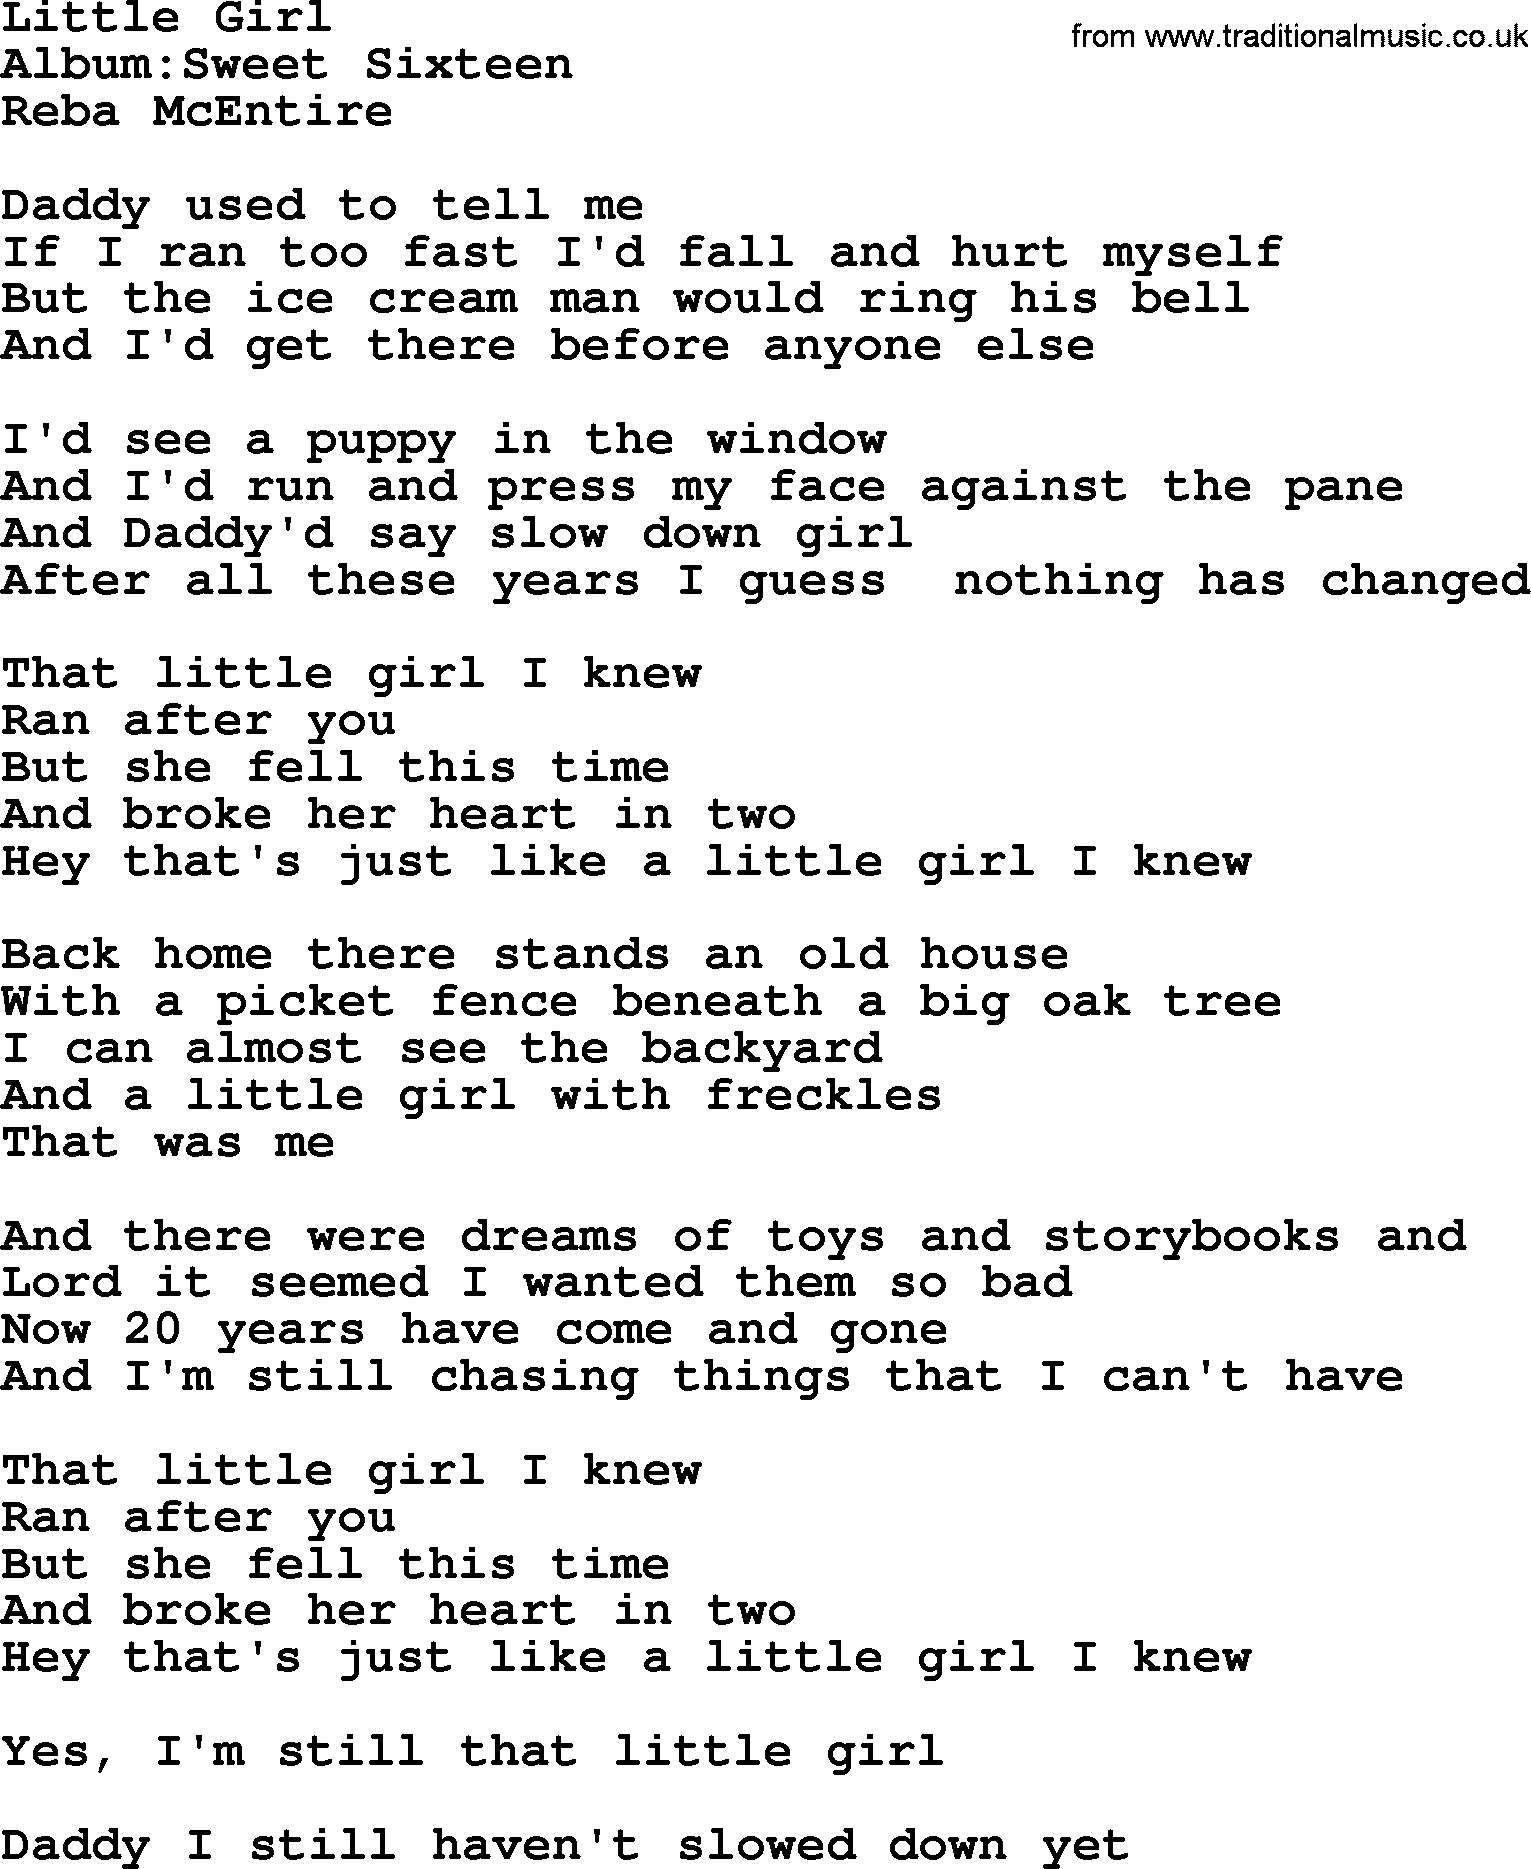 Reba McEntire song: Little Girl lyrics